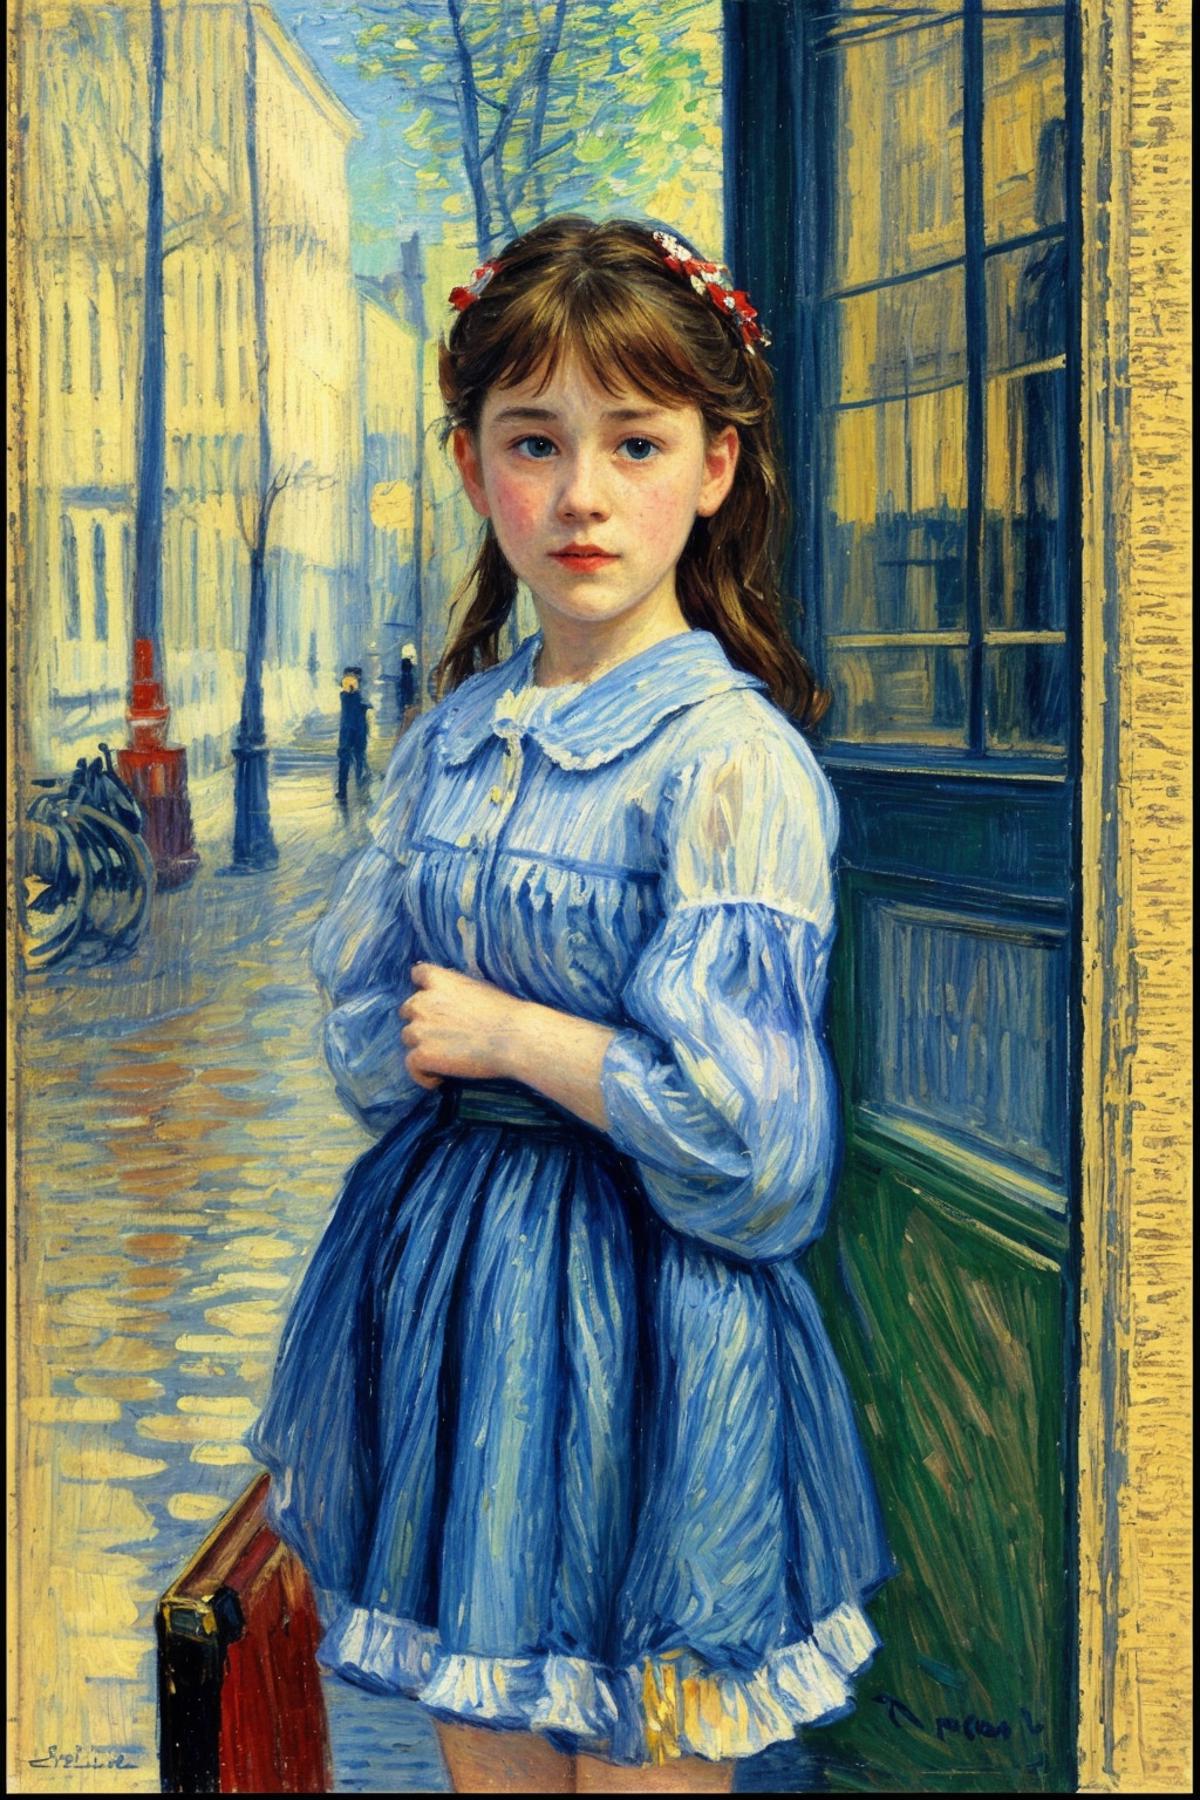 Van Gogh Likeness image by Egregore239